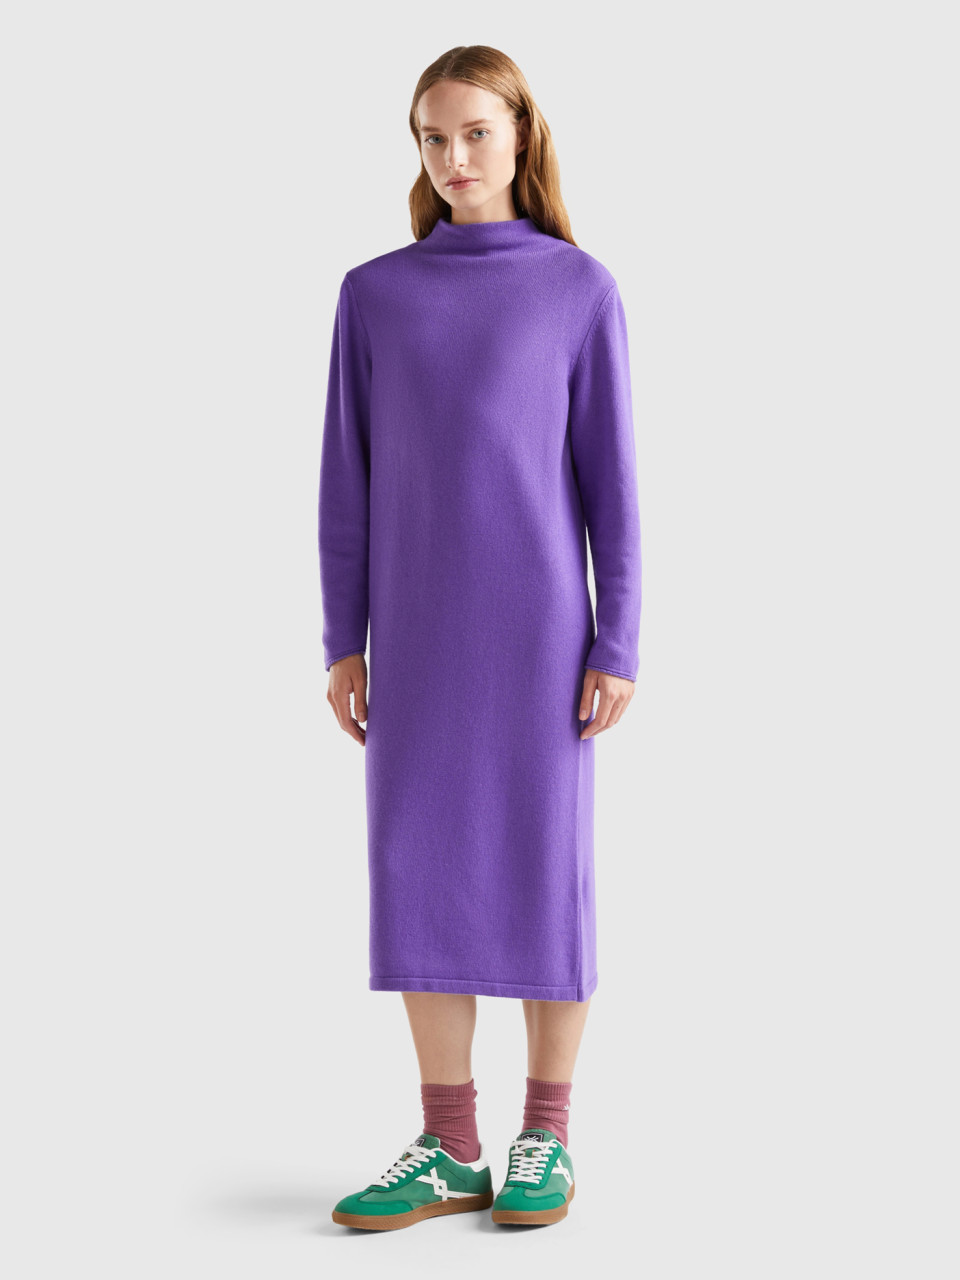 Benetton, Cashmere Blend Midi Dress, Violet, Women